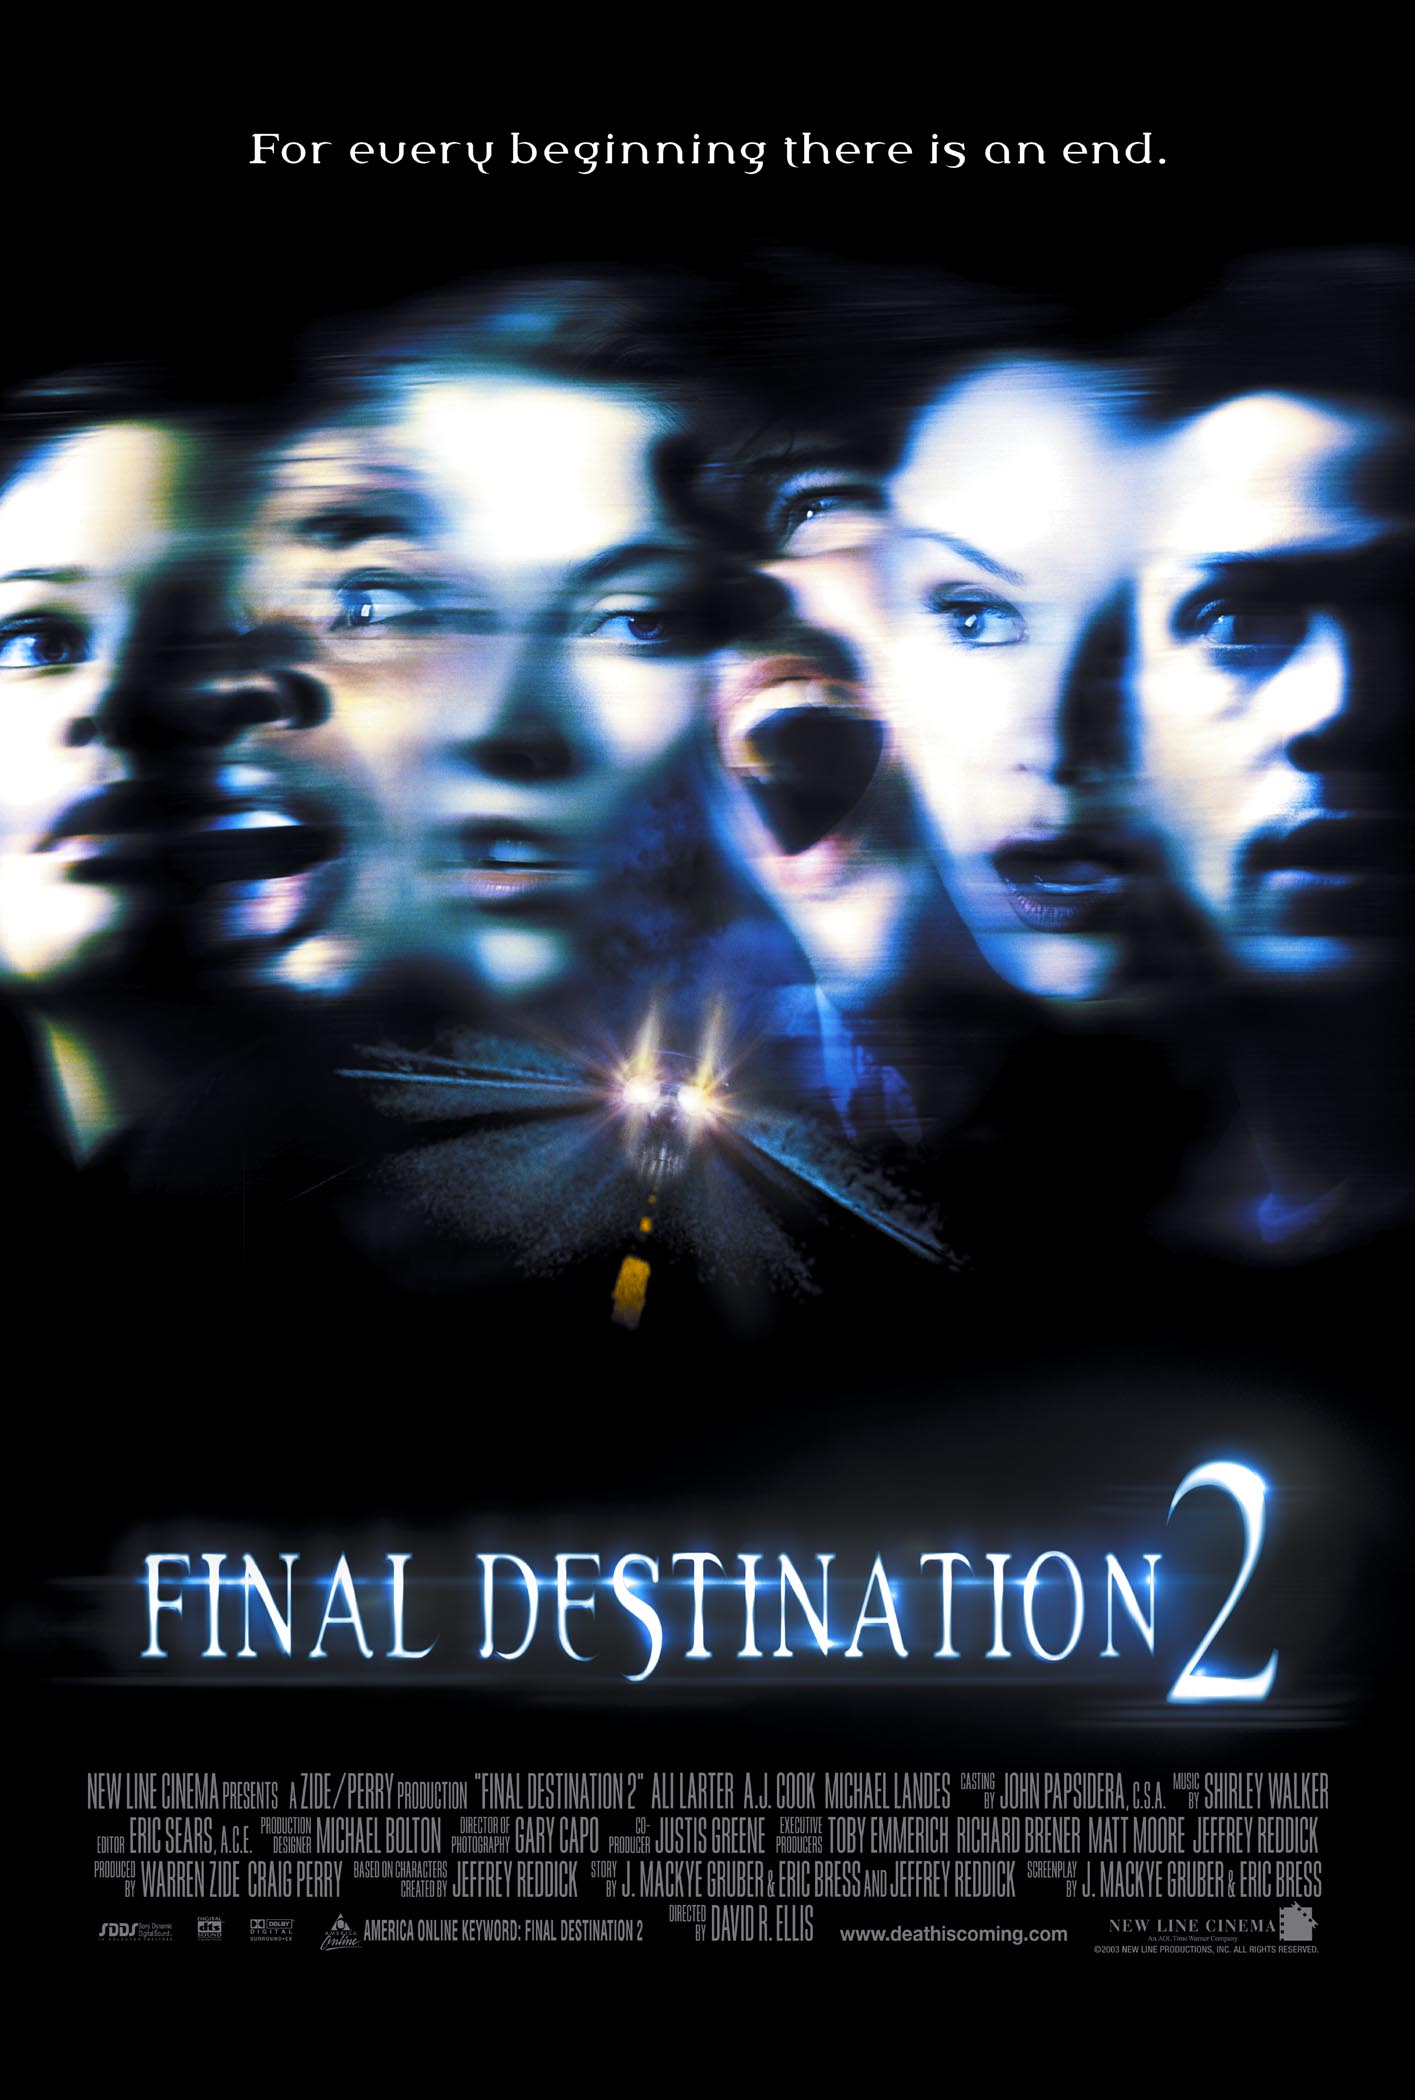 FINAL DESTINATION 5 Trailer and Poster